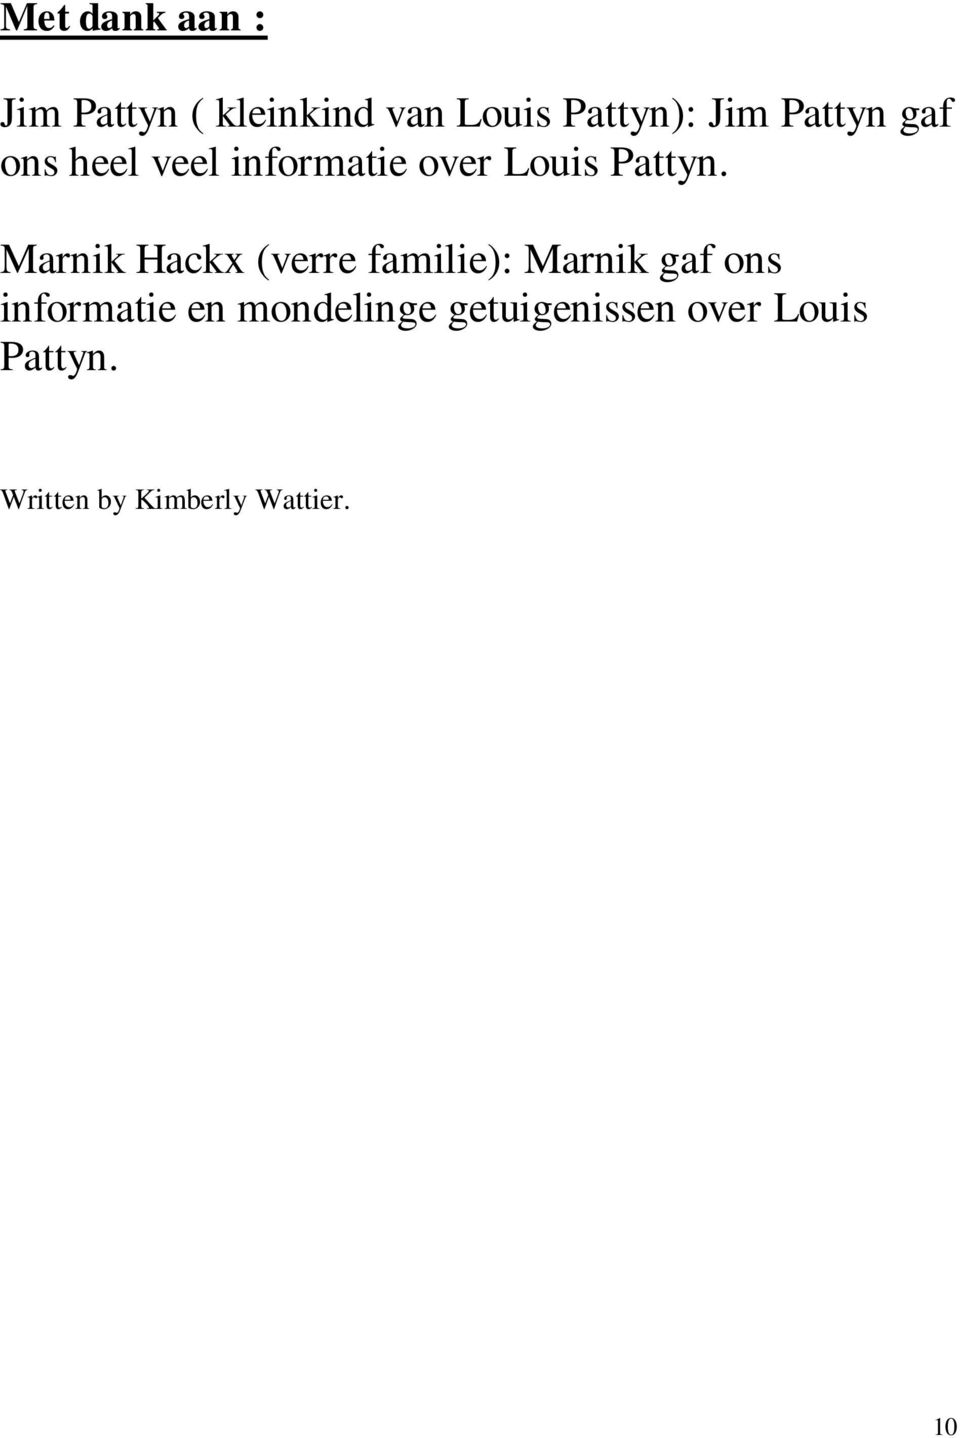 Marnik Hackx (verre familie): Marnik gaf ons informatie en